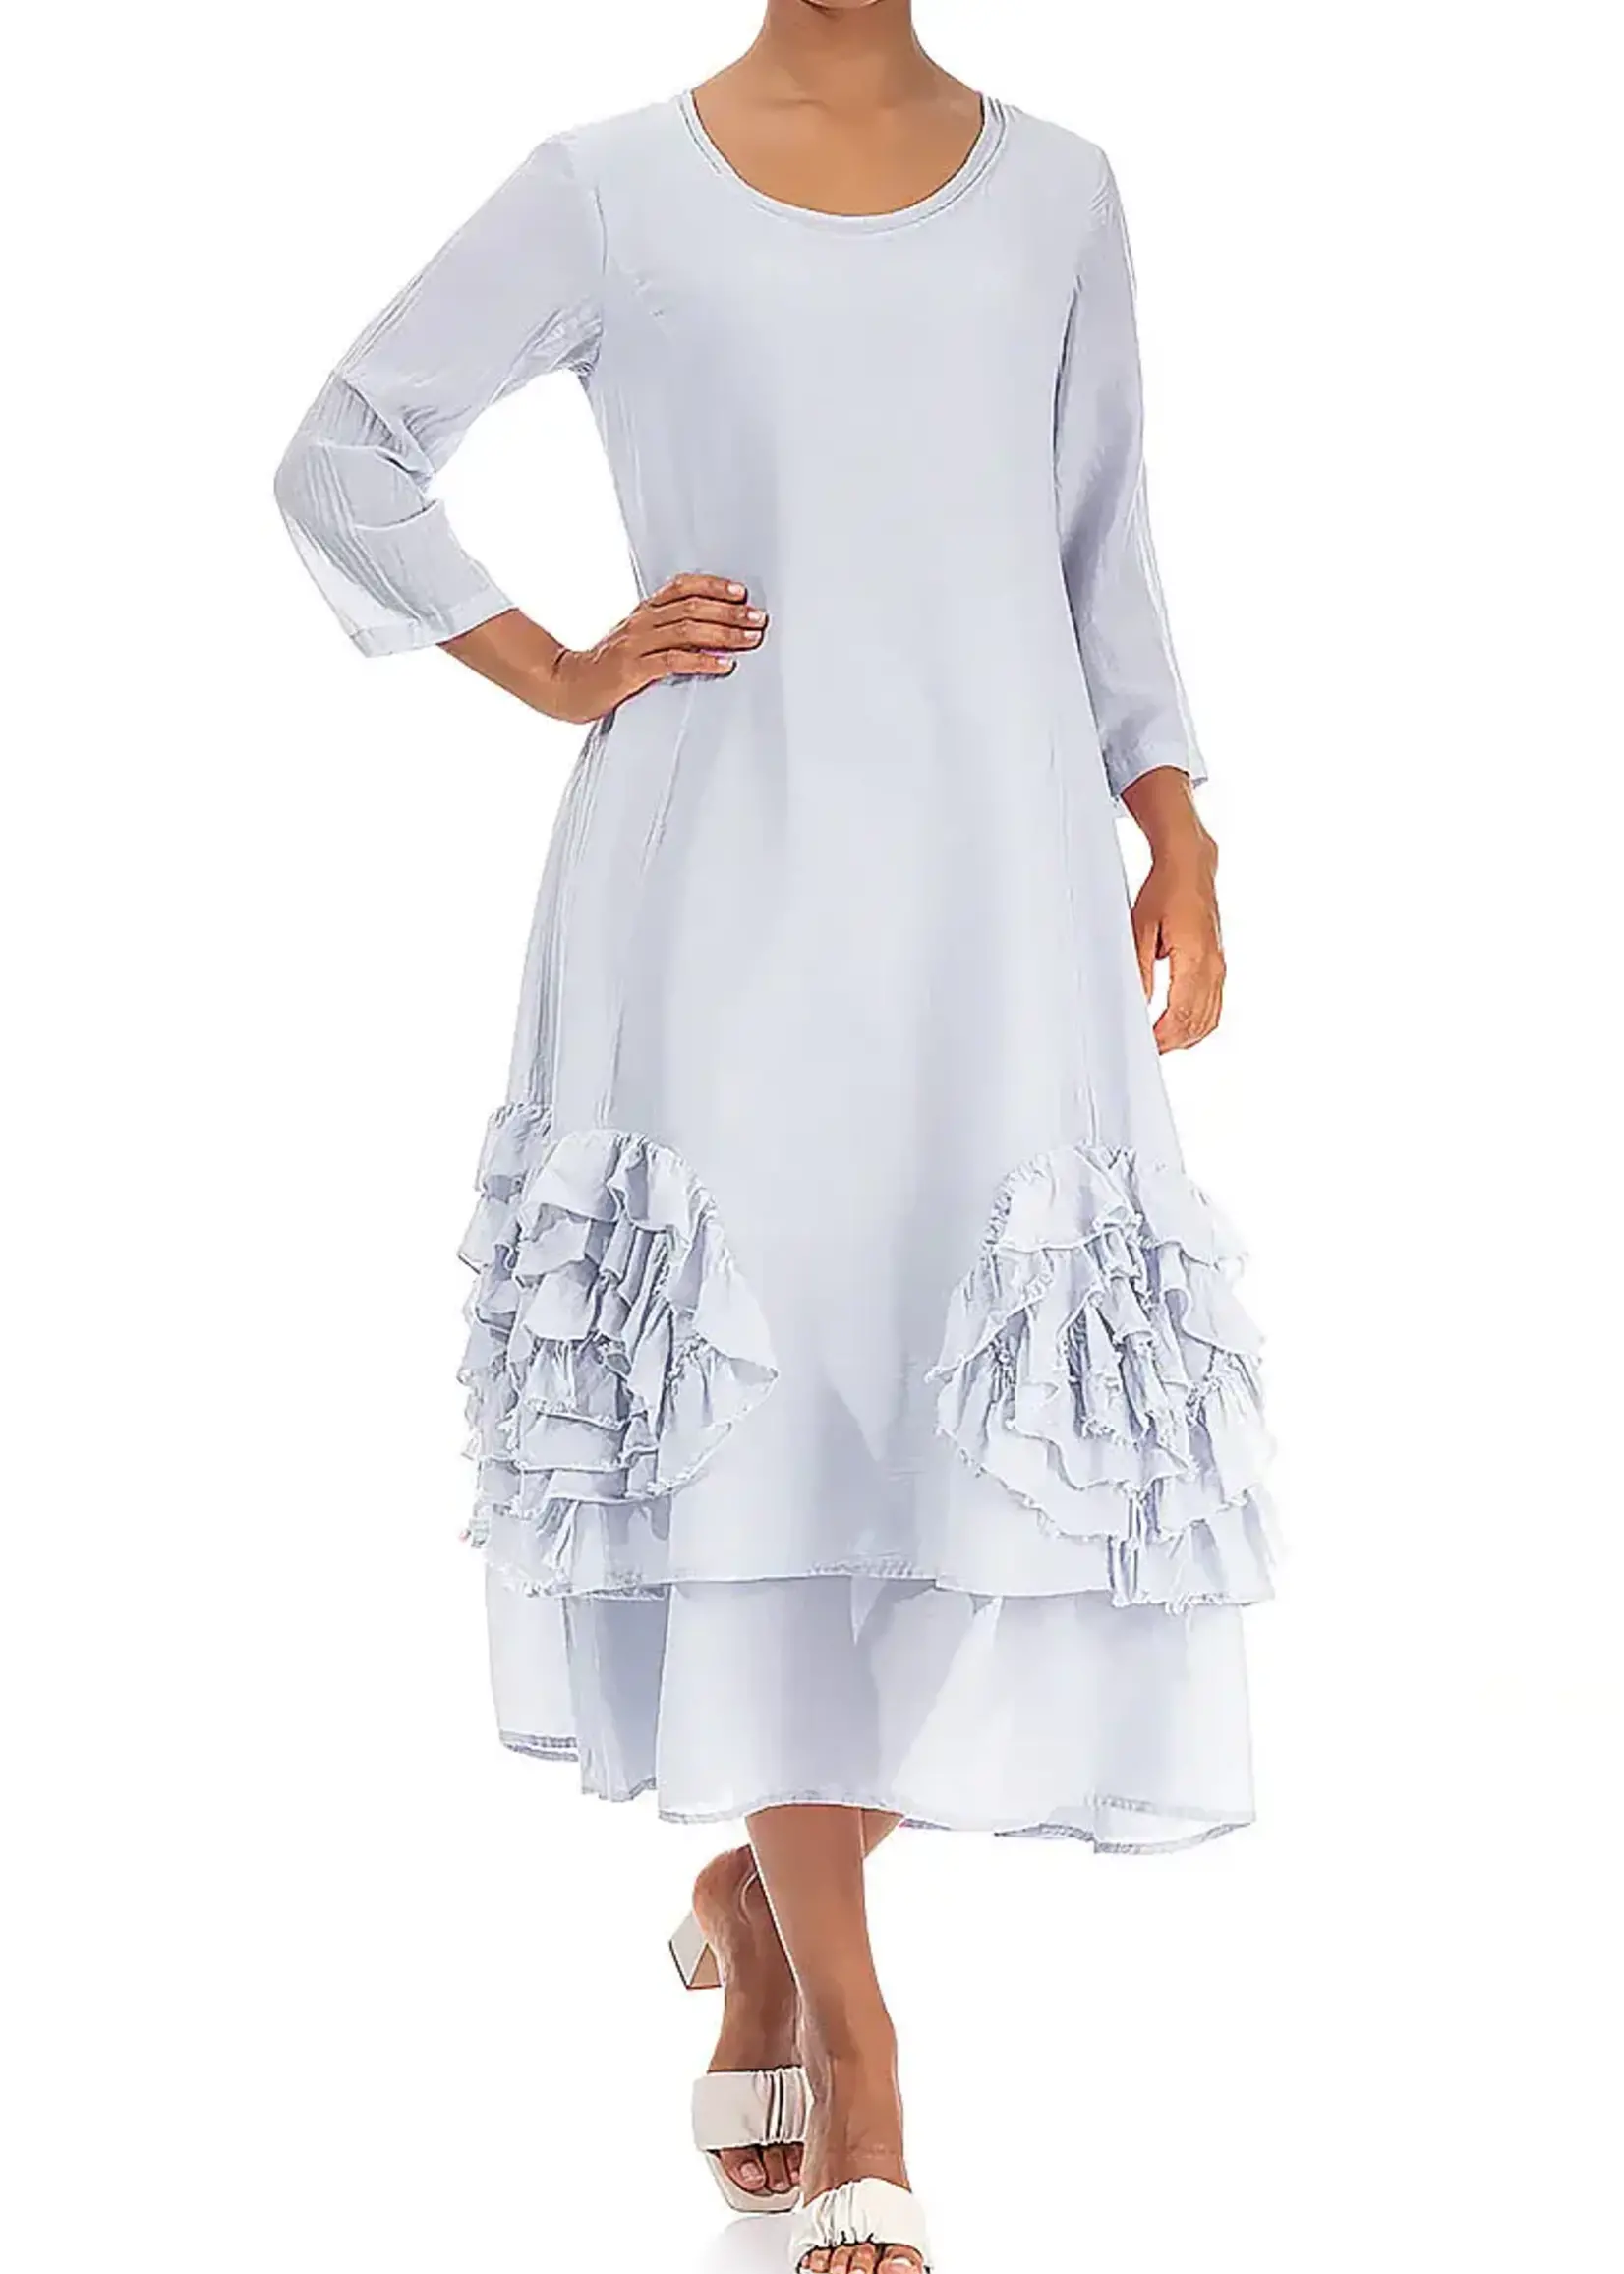 GRIZAS Frilly Flower Lavender Silk Cotton Dress